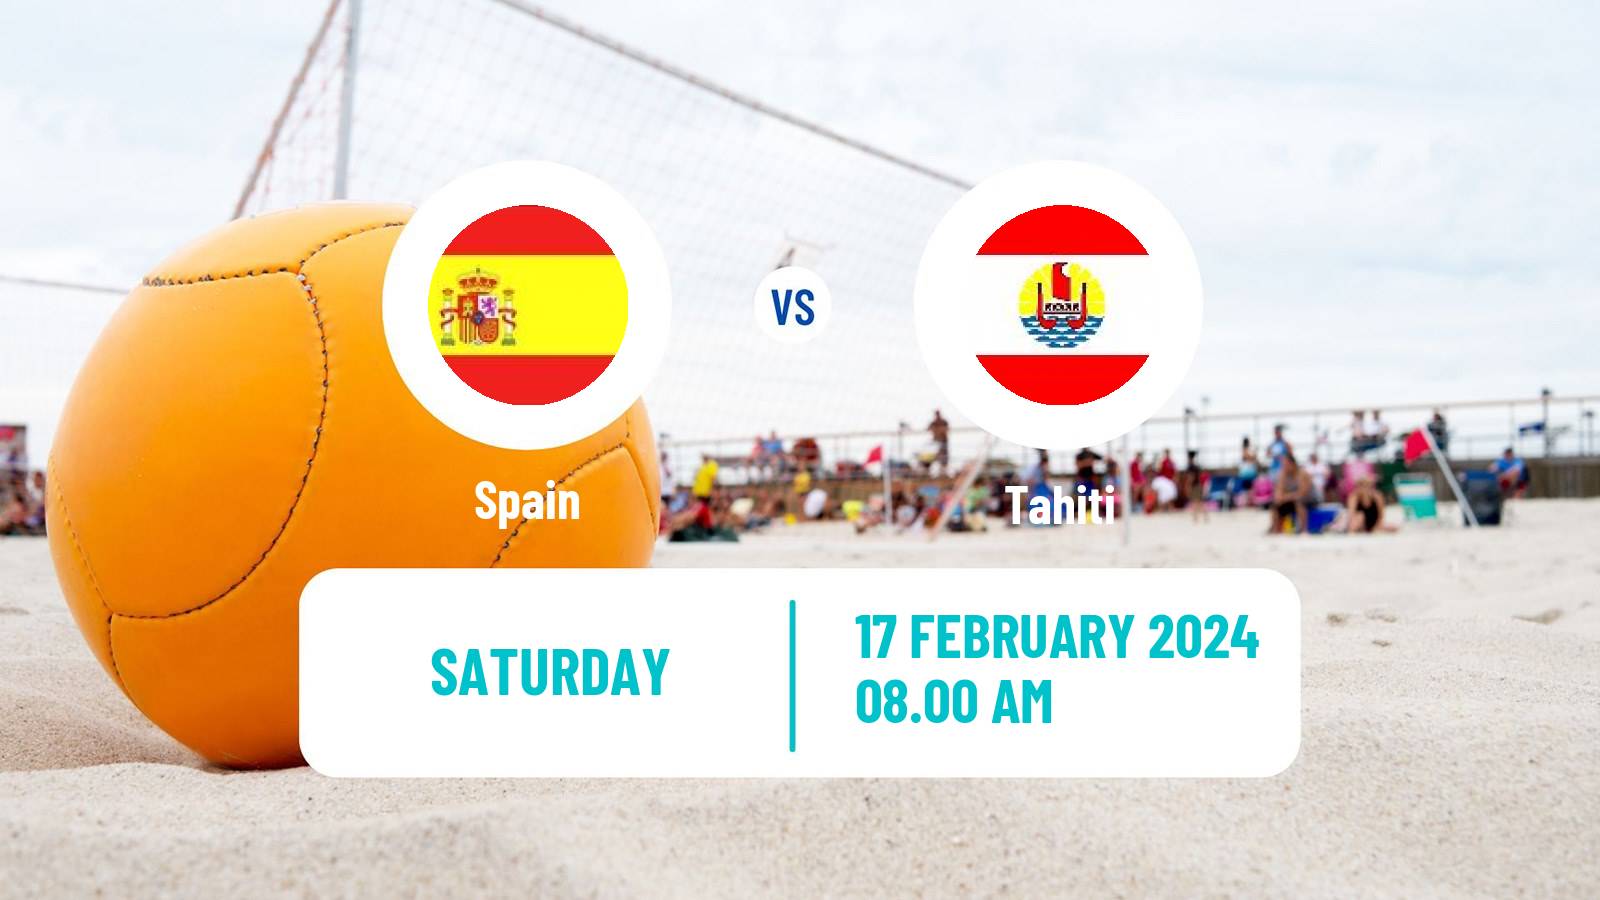 Beach soccer World Cup Spain - Tahiti